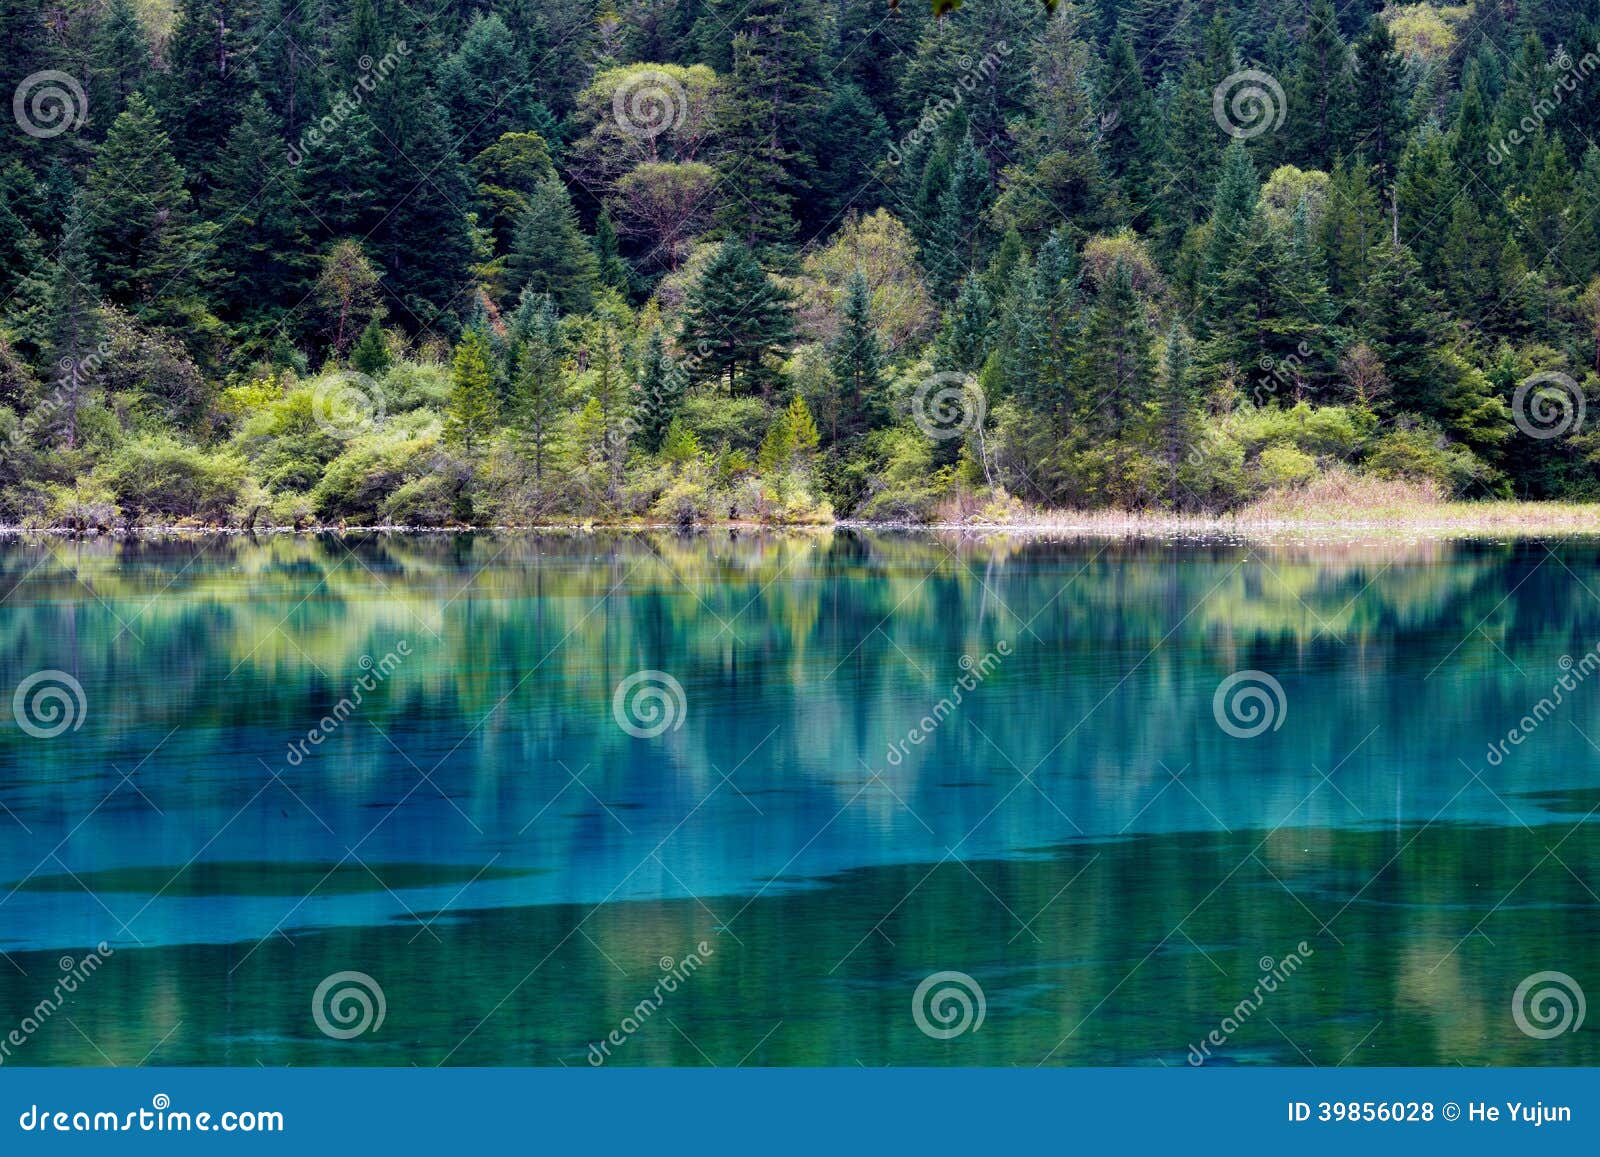 Landscape Of Lake And Trees Stock Photo Image Of Scenery Jiuzhaigou